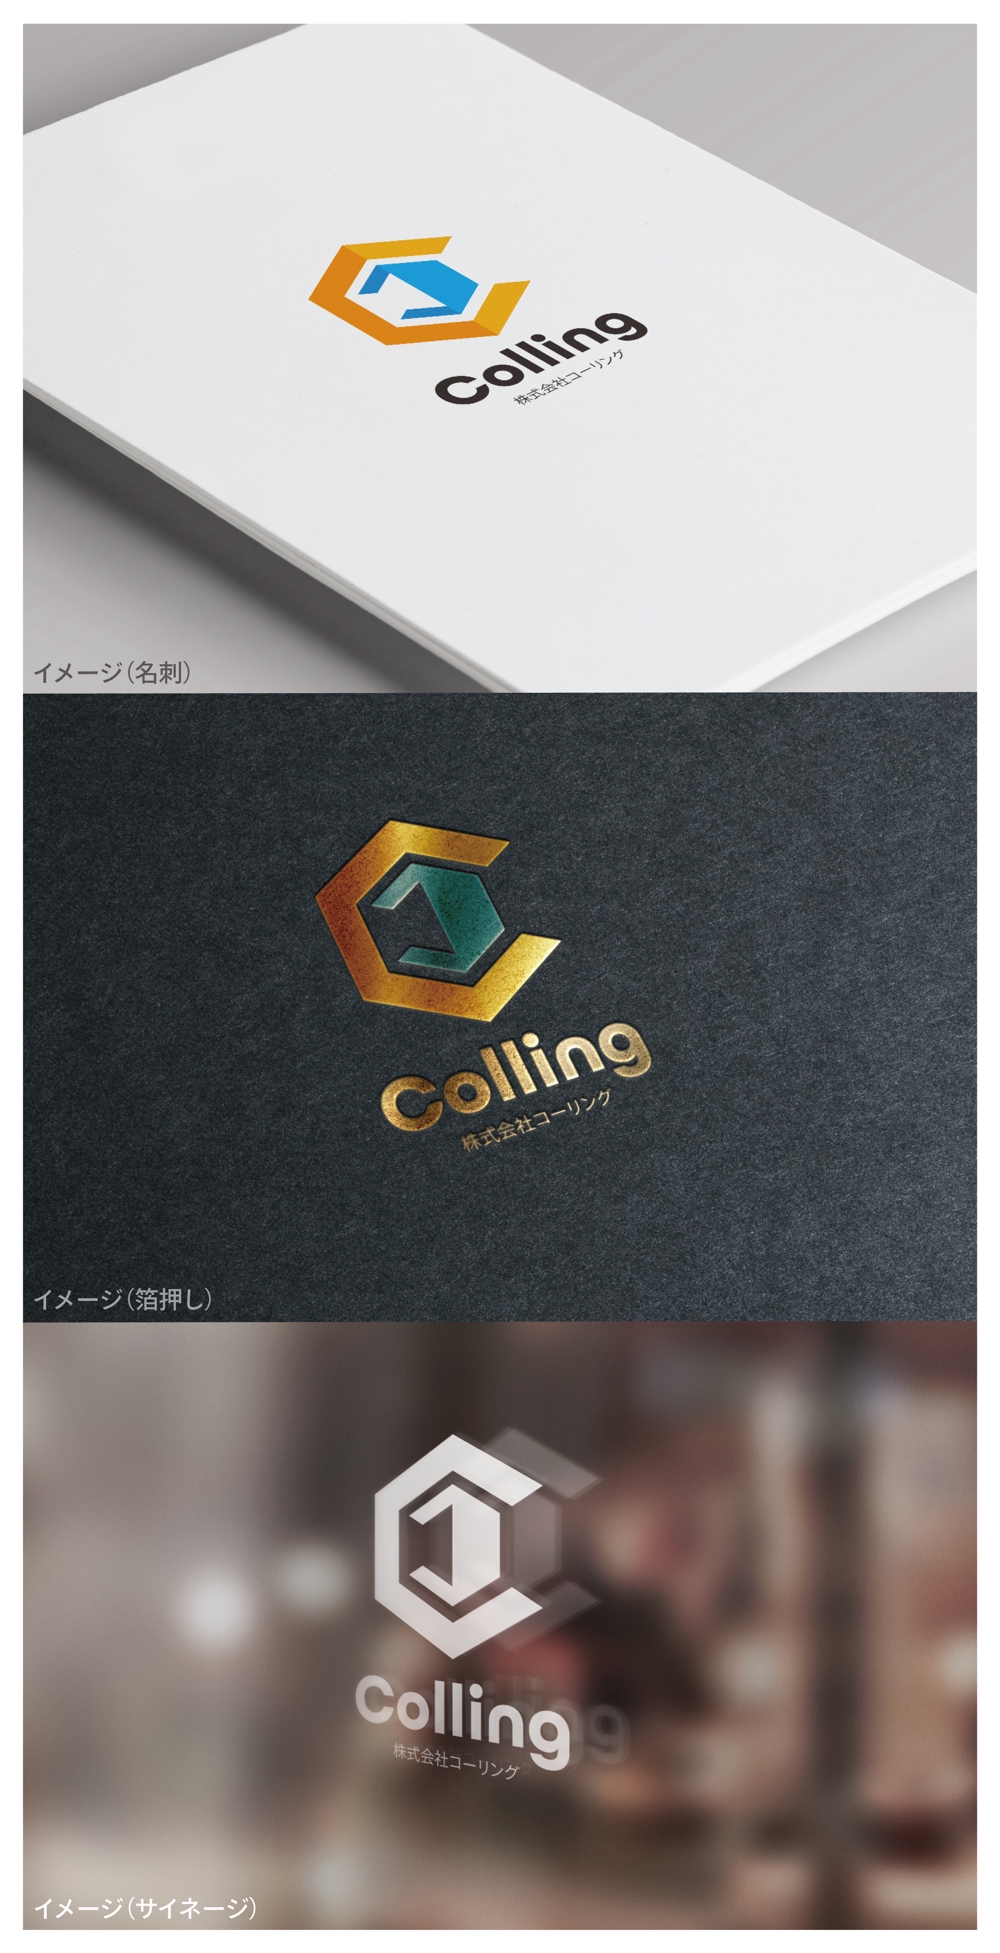 Colling_logo02_01.jpg